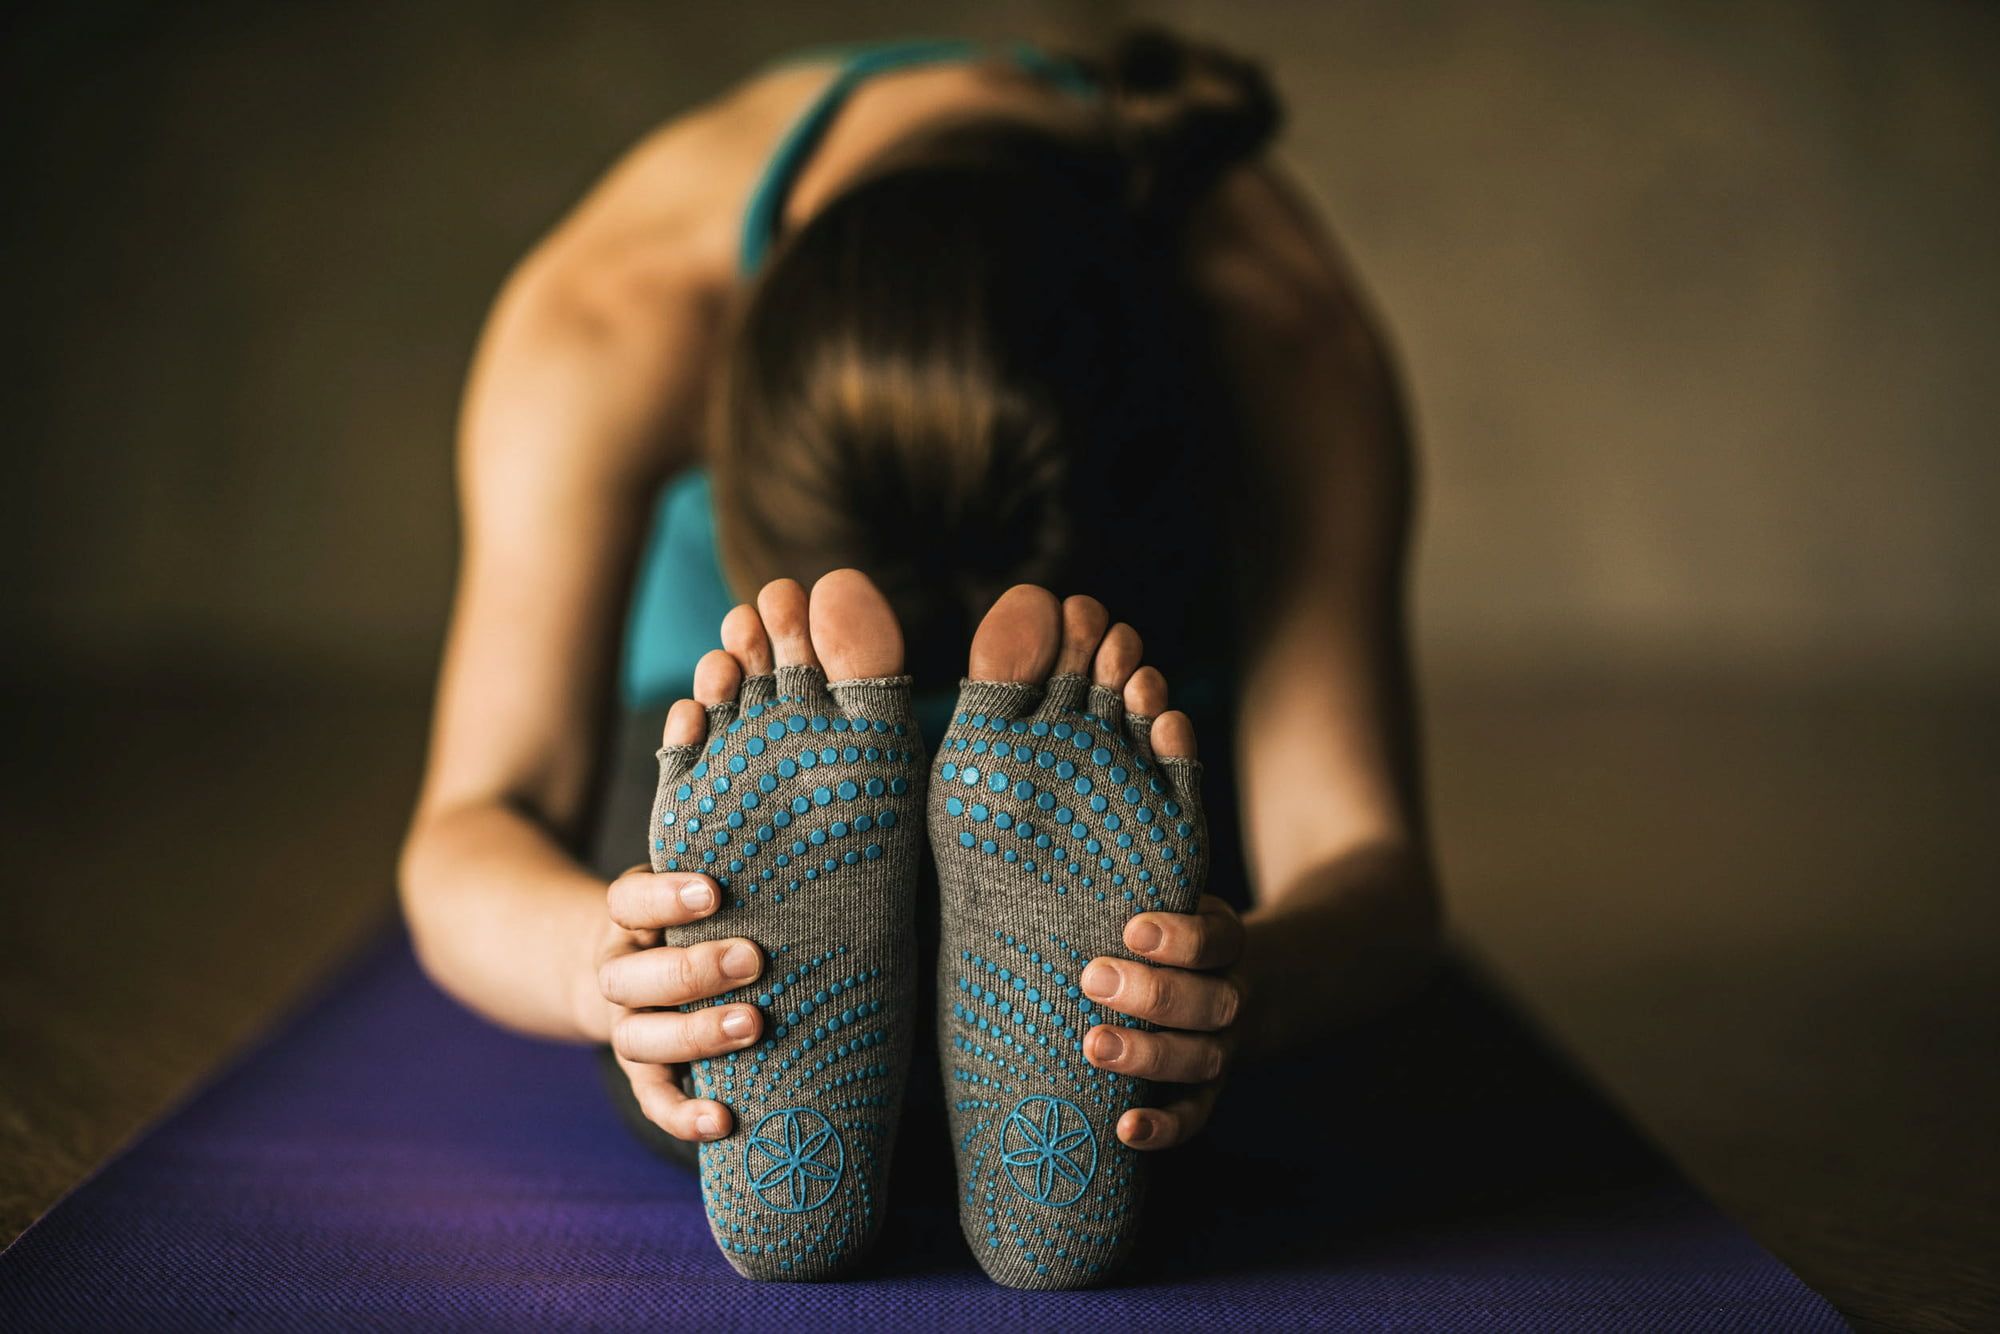 Gaiam Grippy Toeless Yoga Socks at